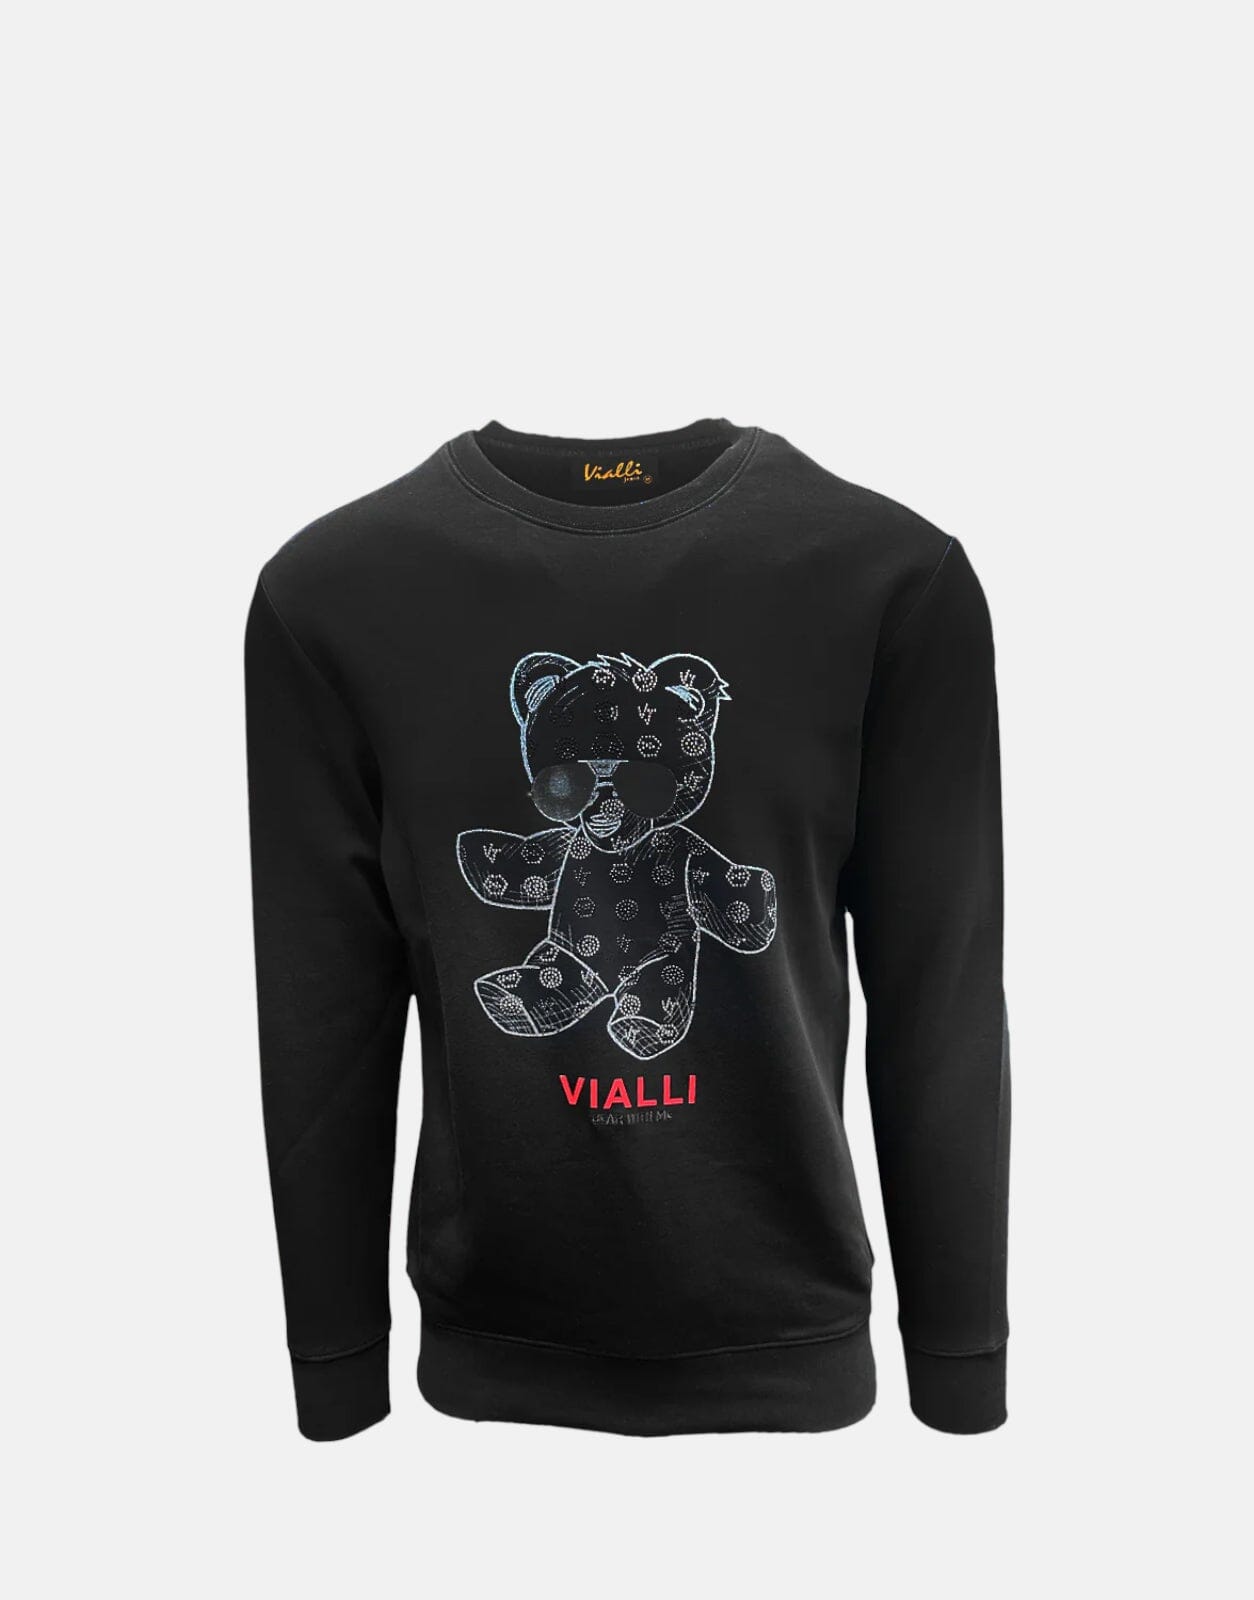 Vialli Geara Black Sweatshirt - Subwear